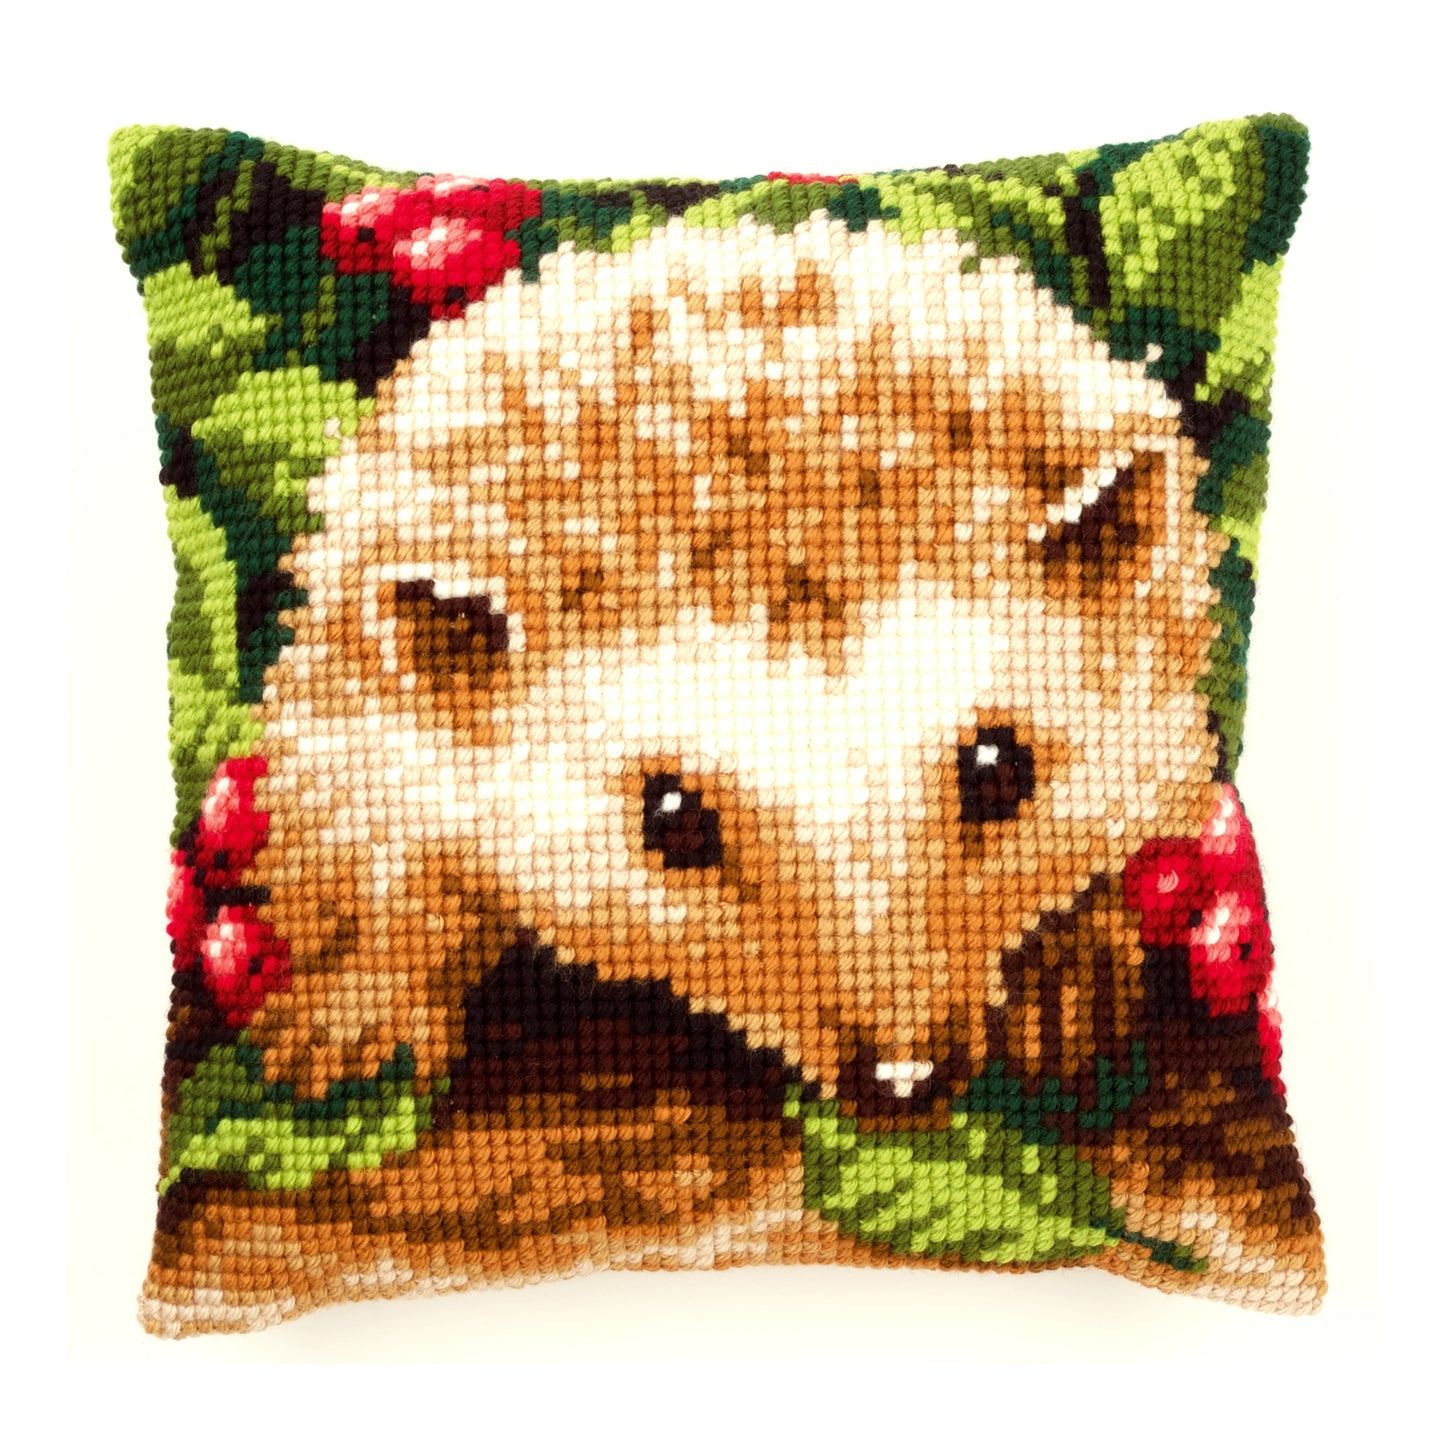 Hedgehog Large Holed Cushion Kit by Vervaco